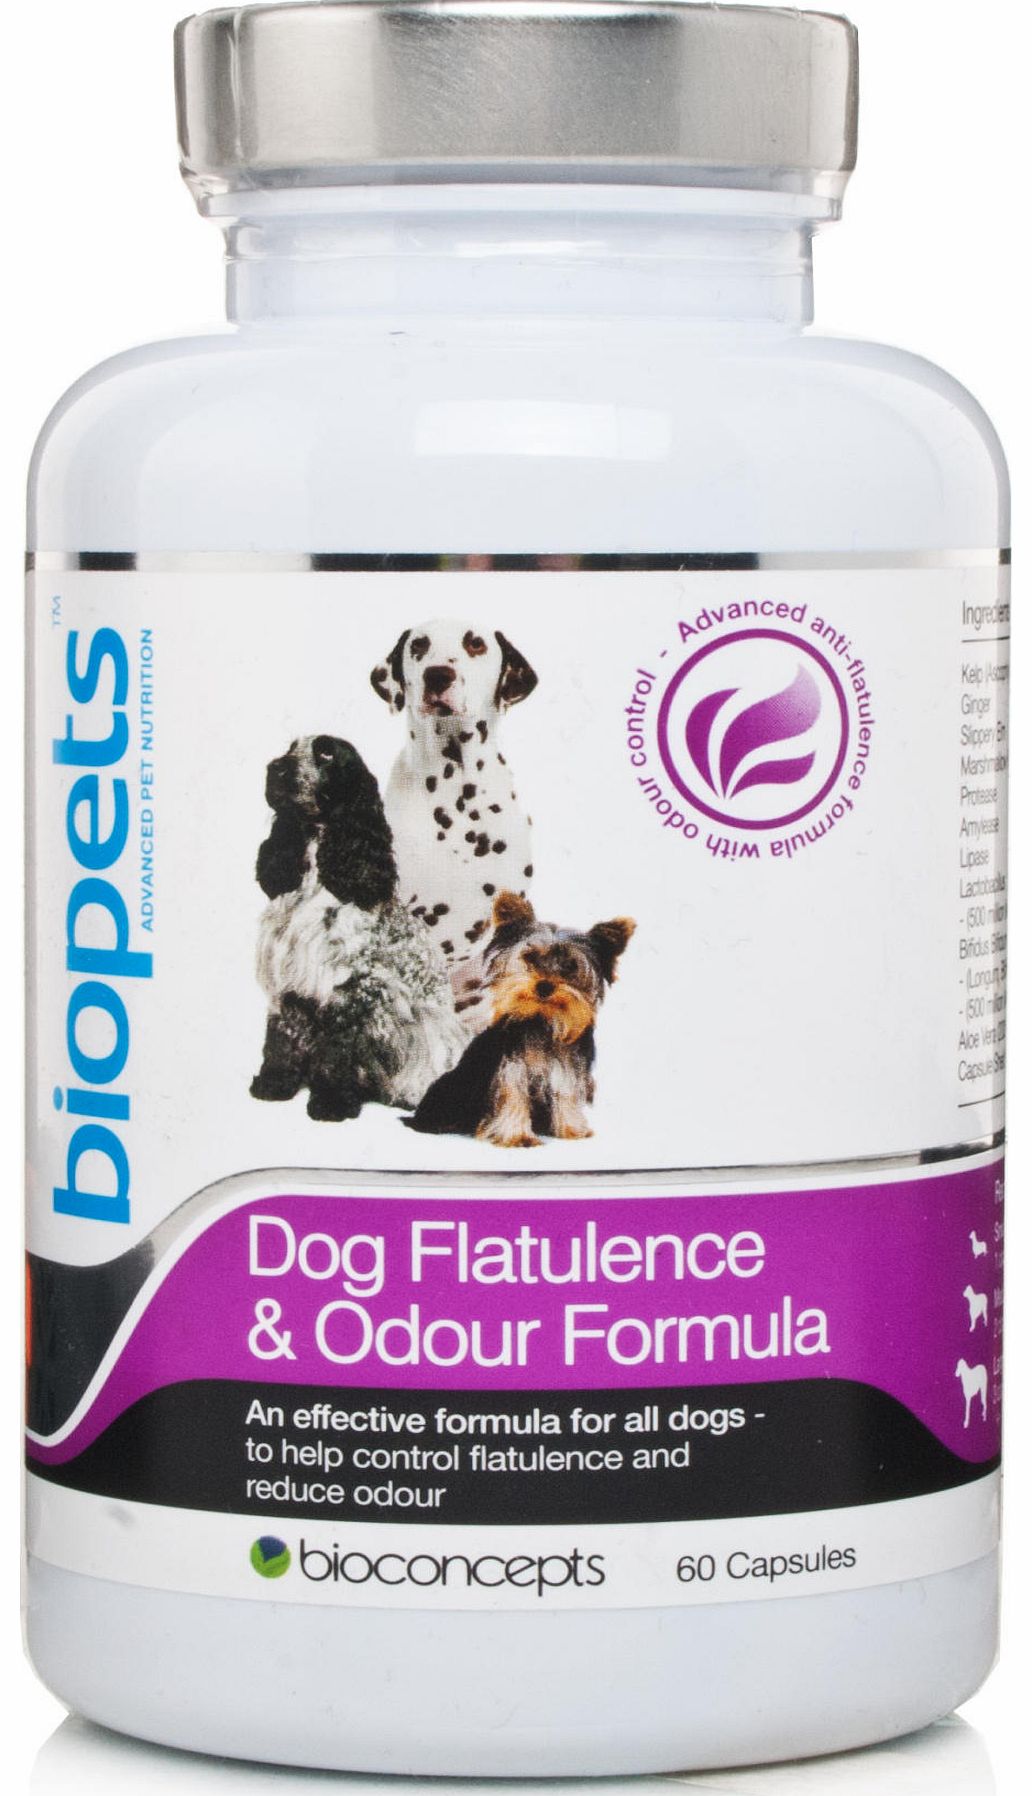 Dog Flatulence & Odour Formula